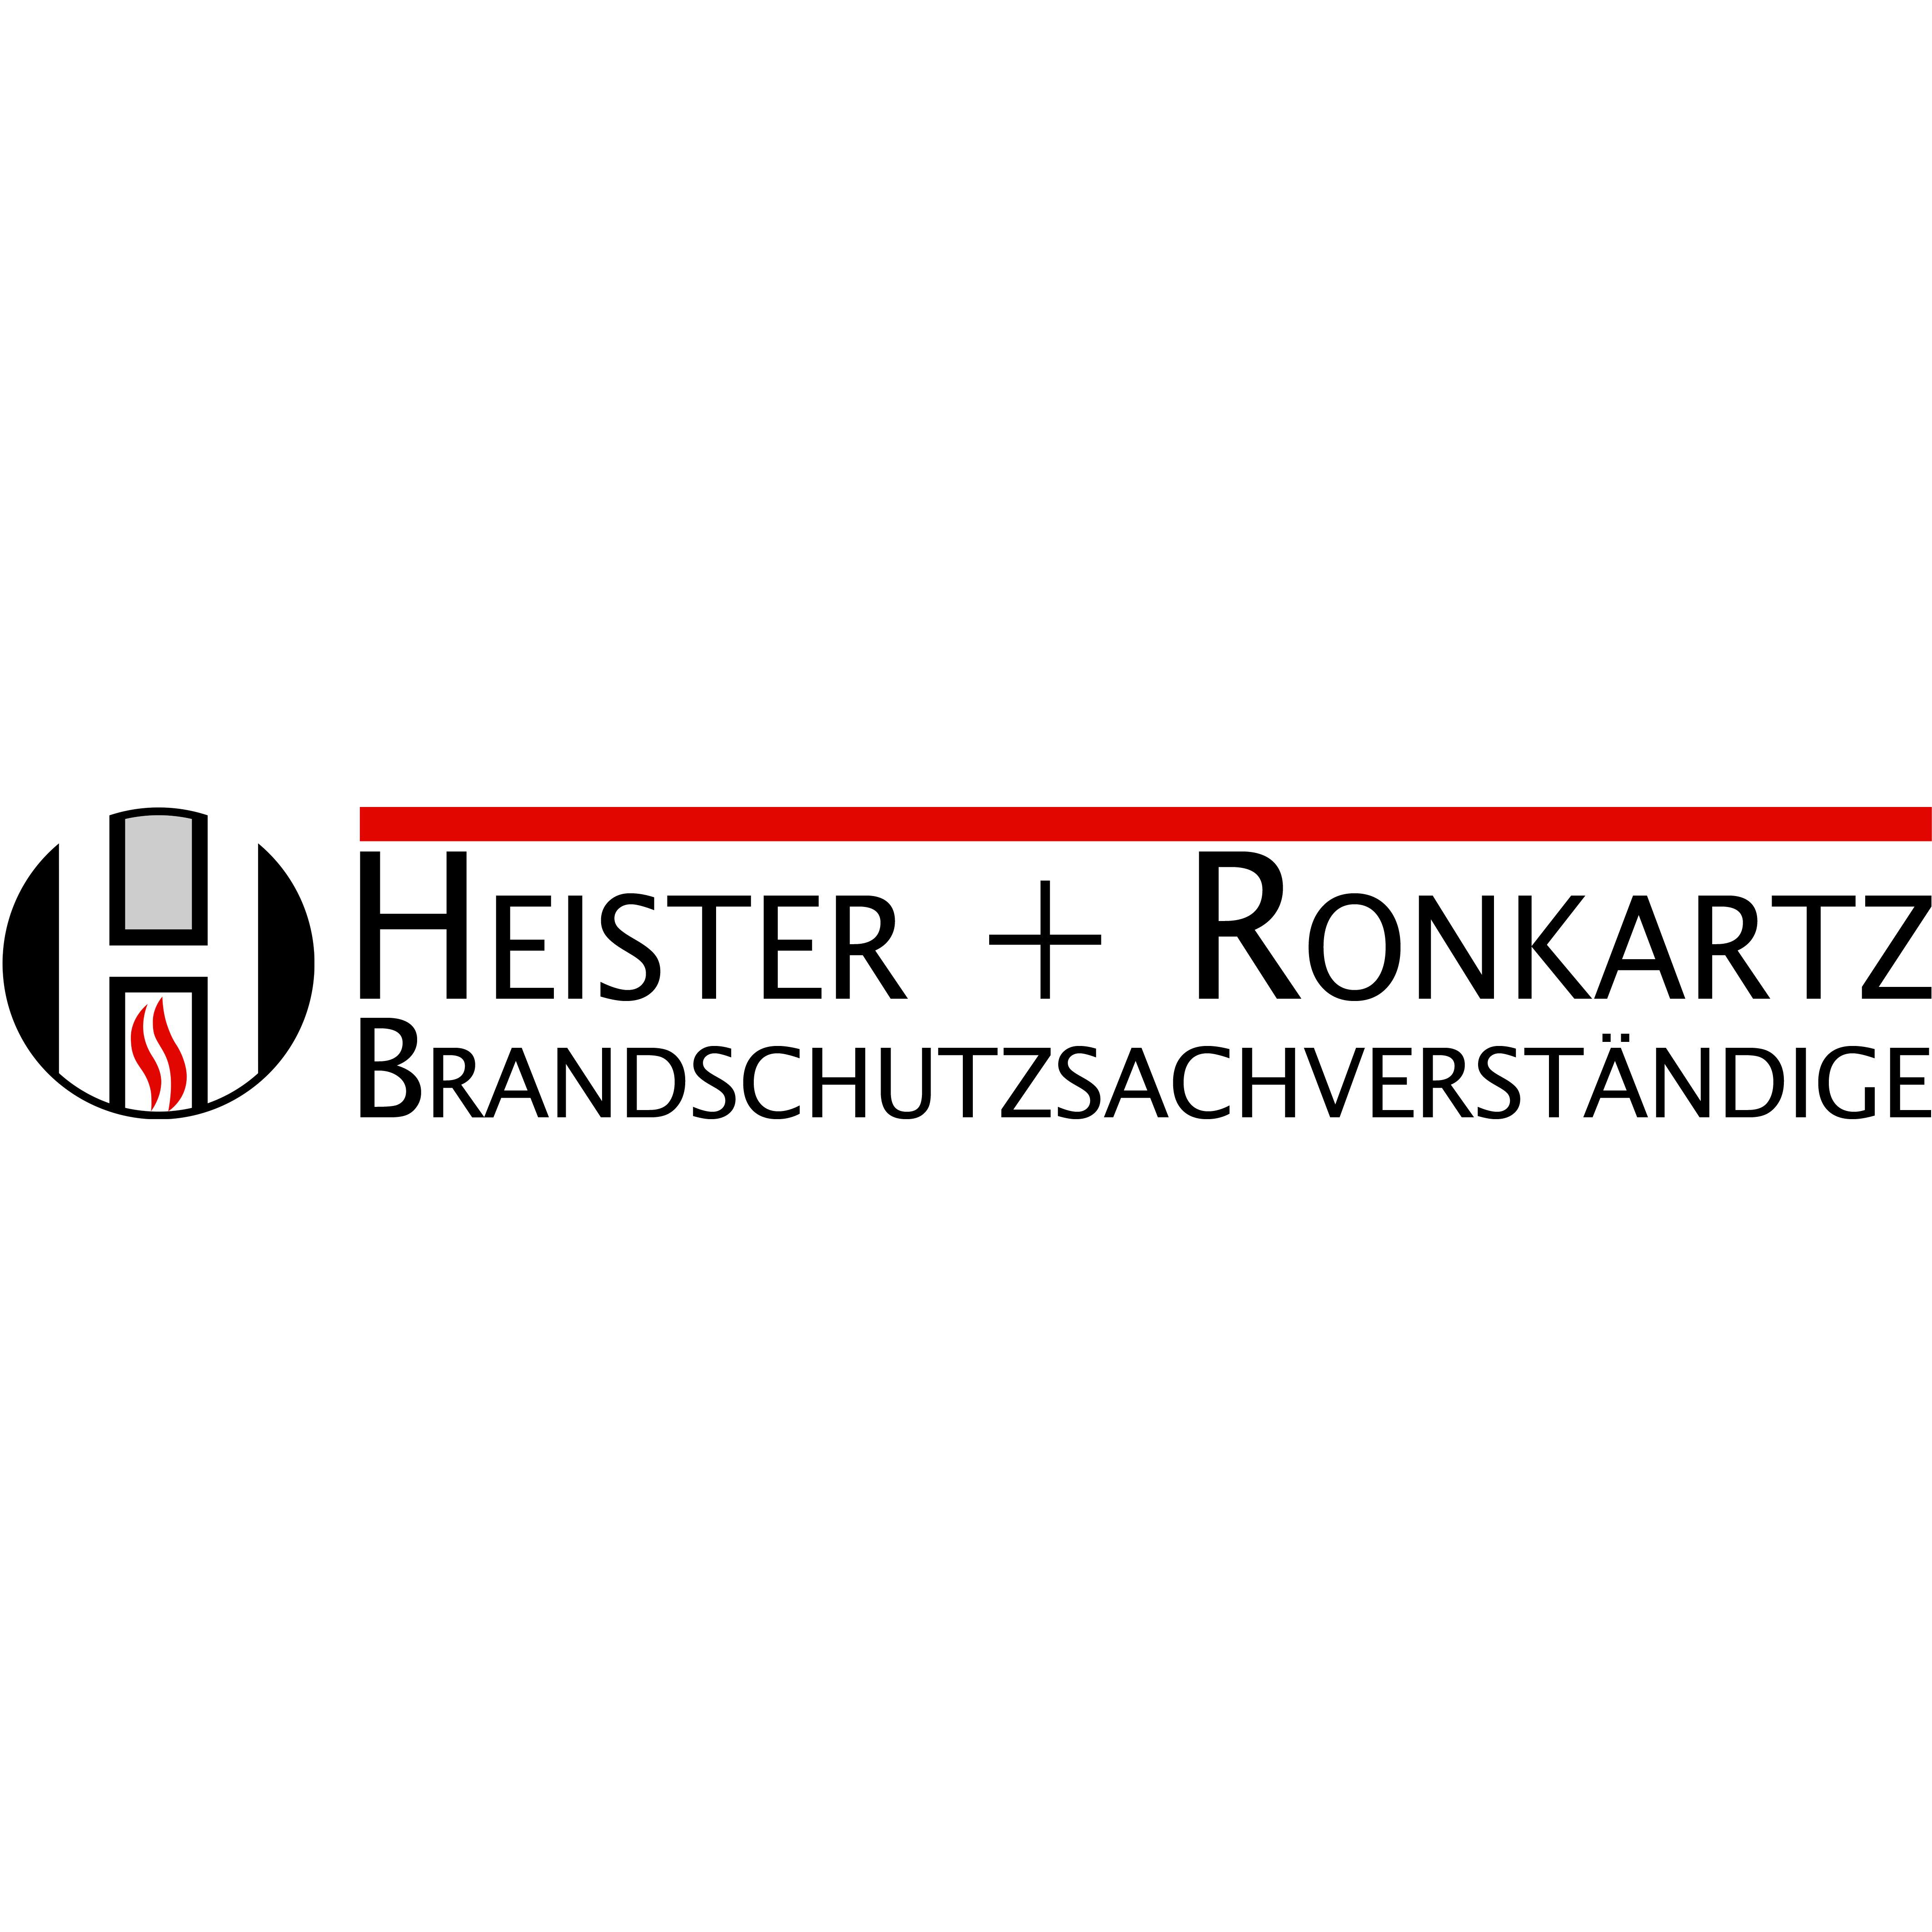 Heister + Ronkartz Brandschutzsachverständige in Hückelhoven - Logo